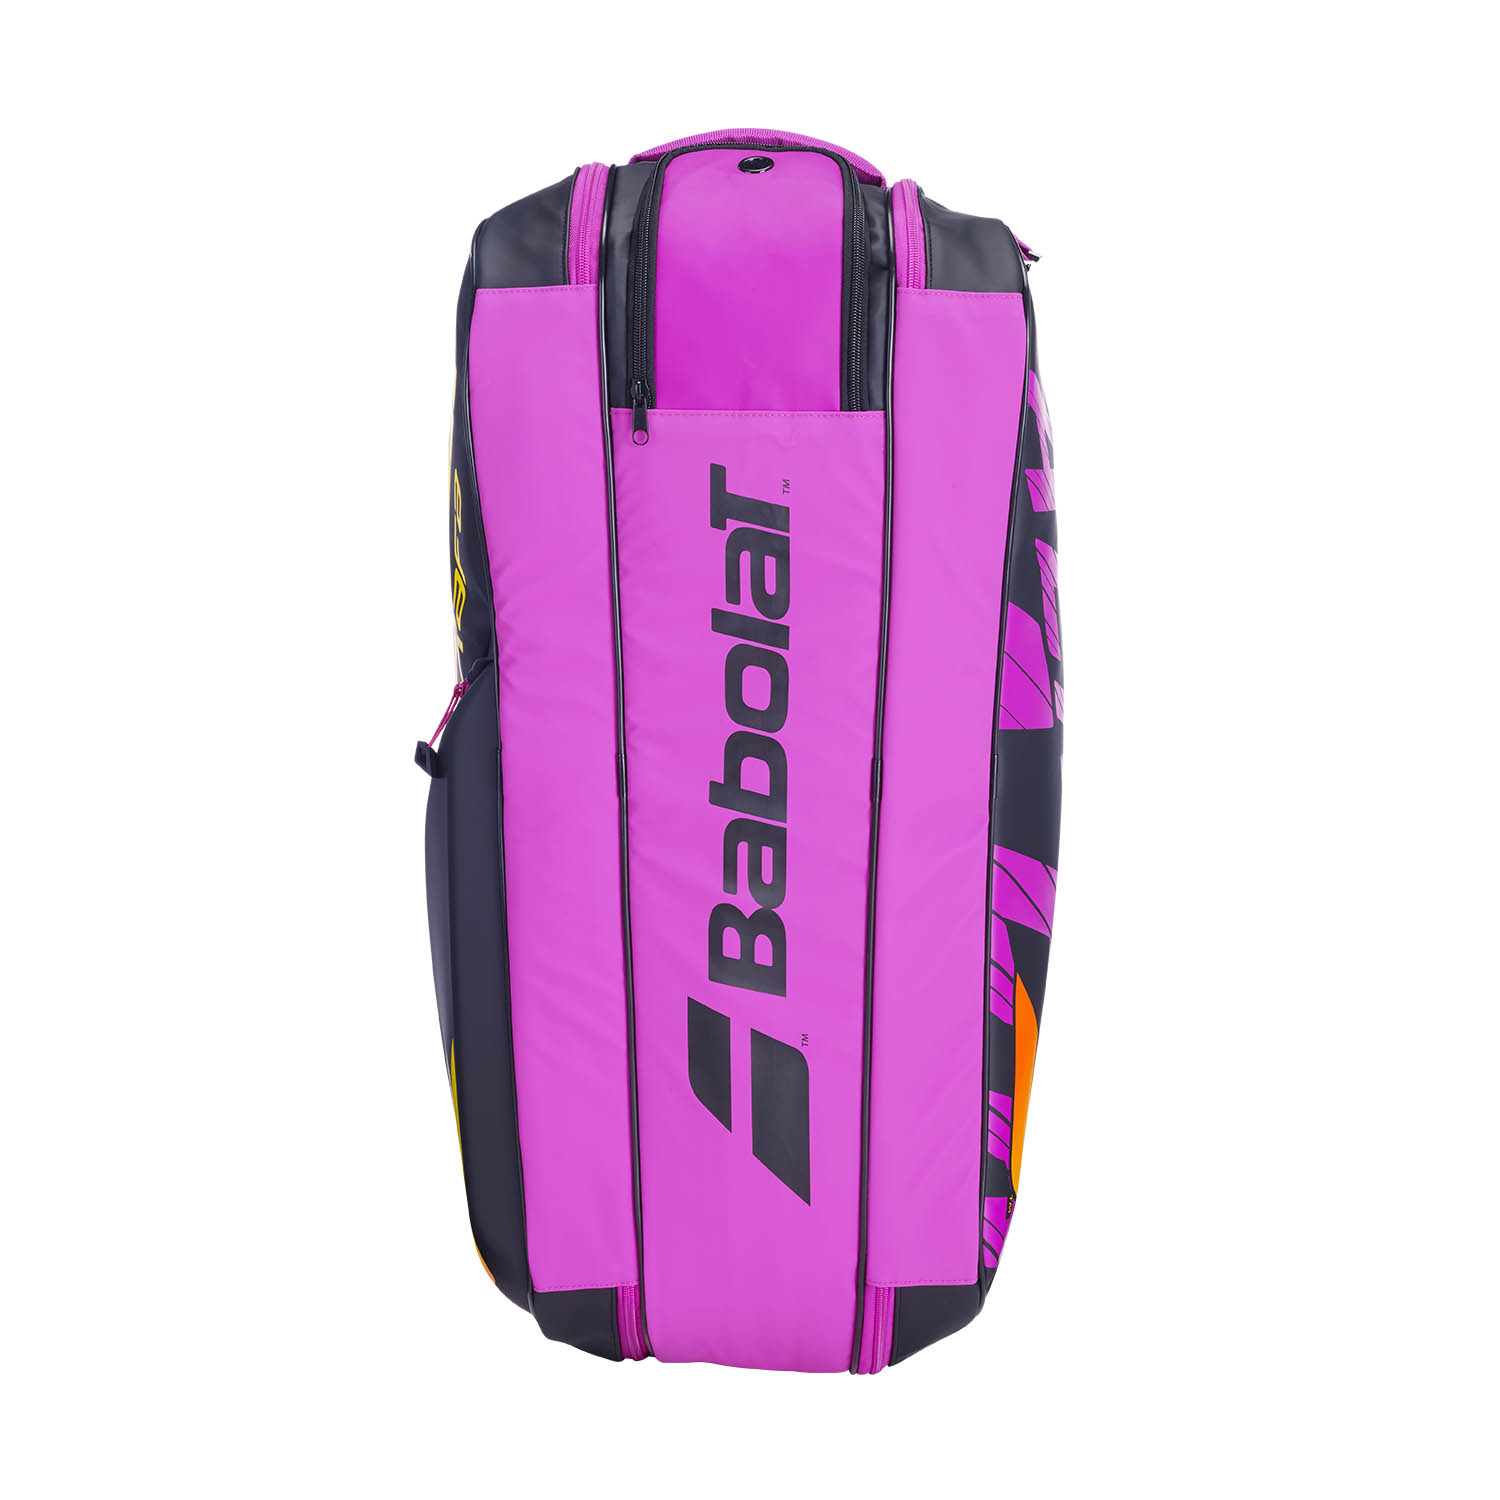 Babolat Pure Aero Rafa x 6 Bag - Black/Orange/Purple